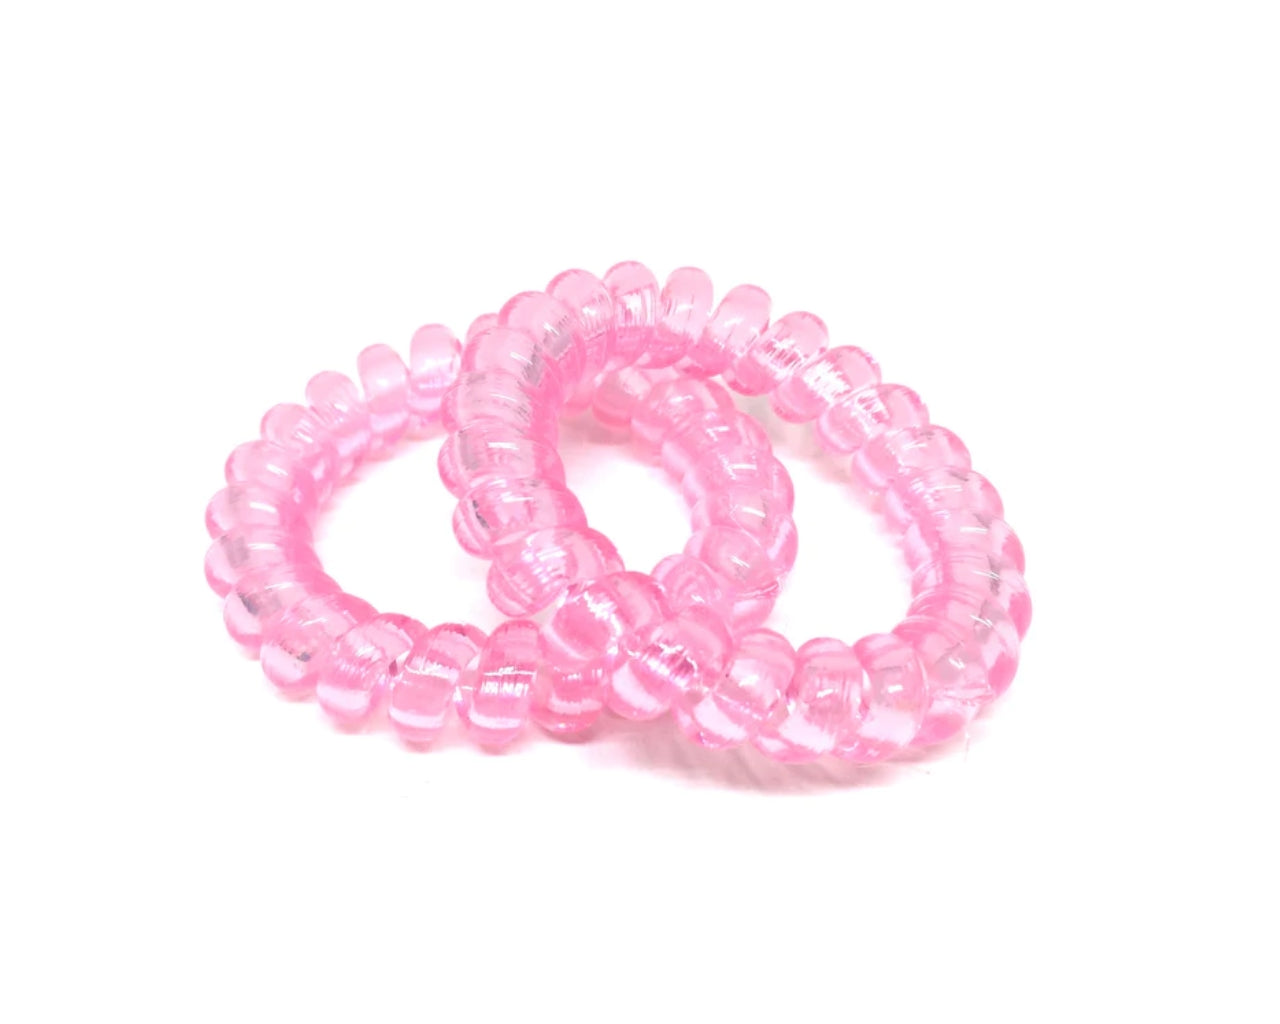 Large Spiral Hair Ties - translucent pink